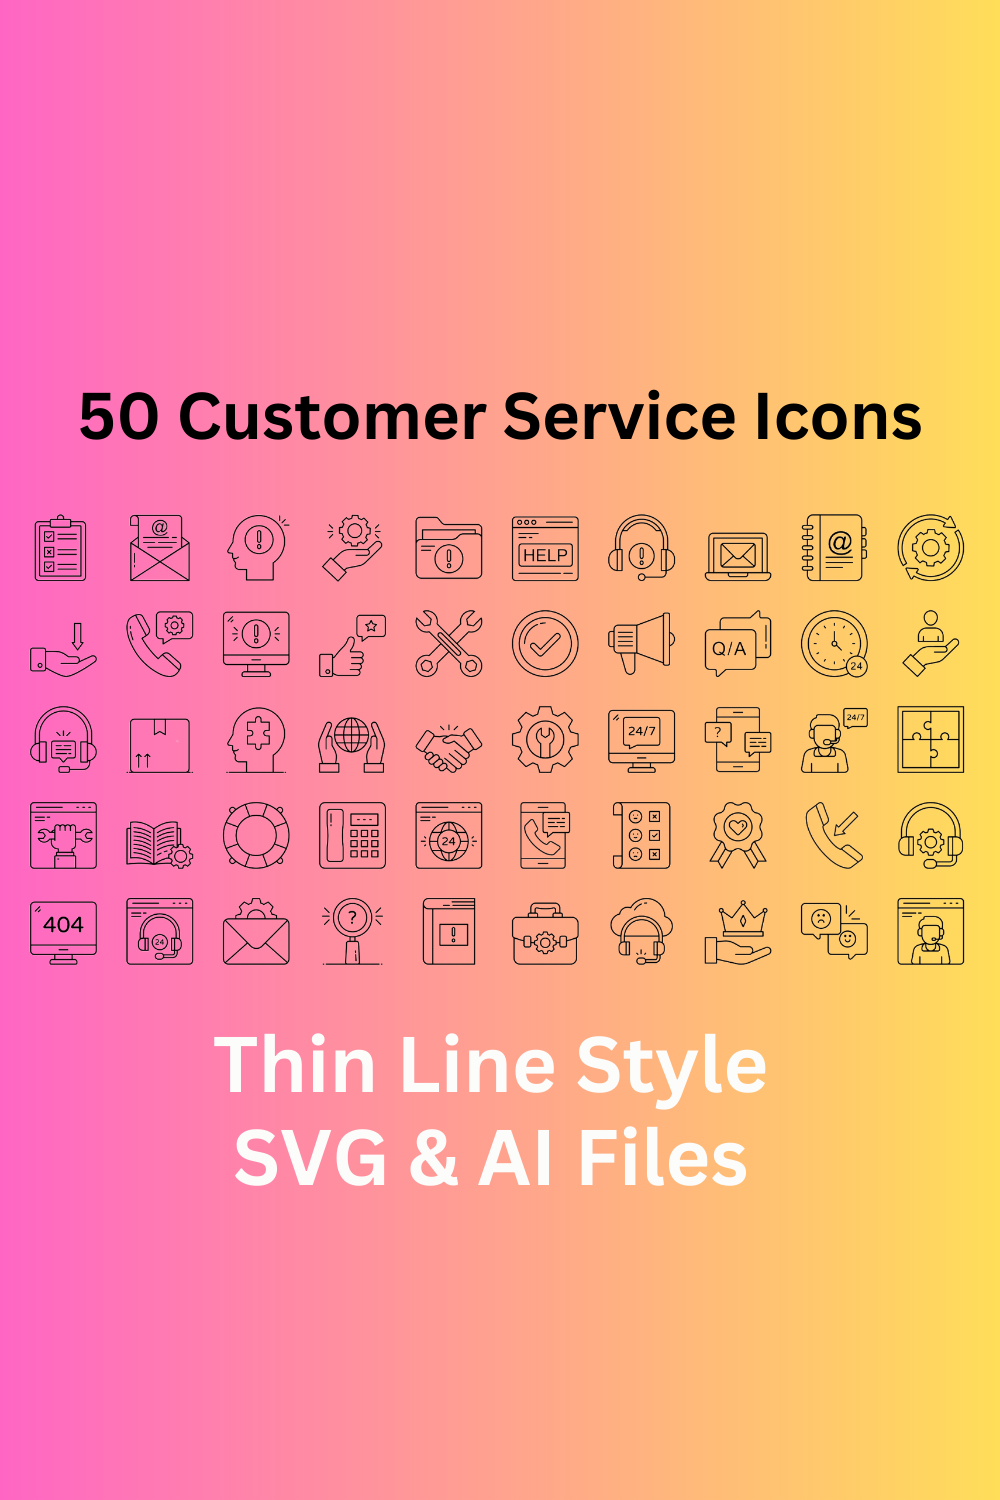 customer icons